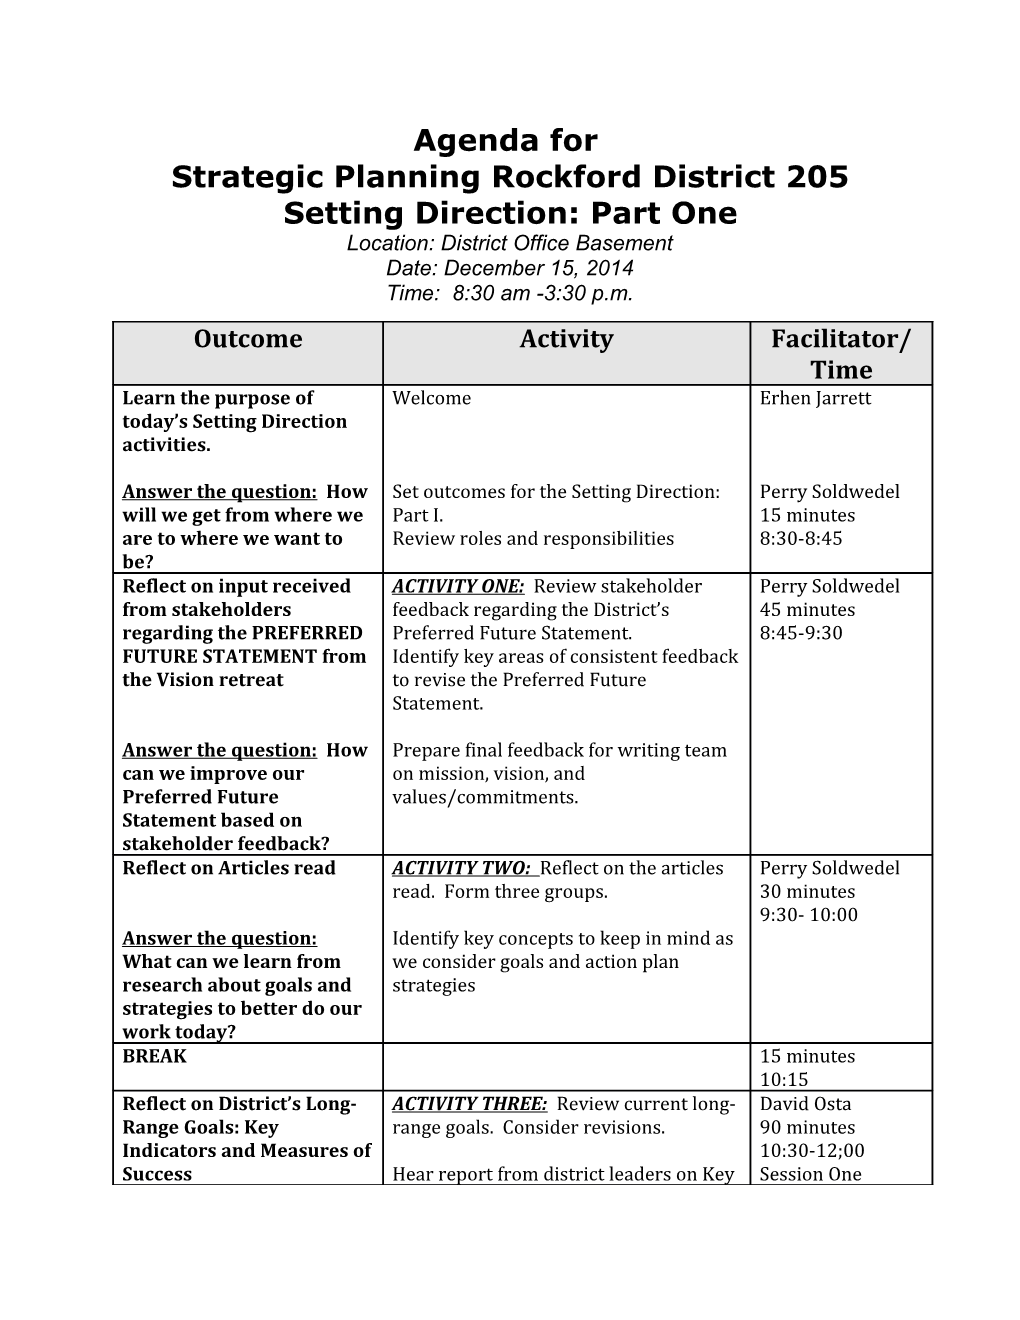 Strategic Planning Rockford District 205